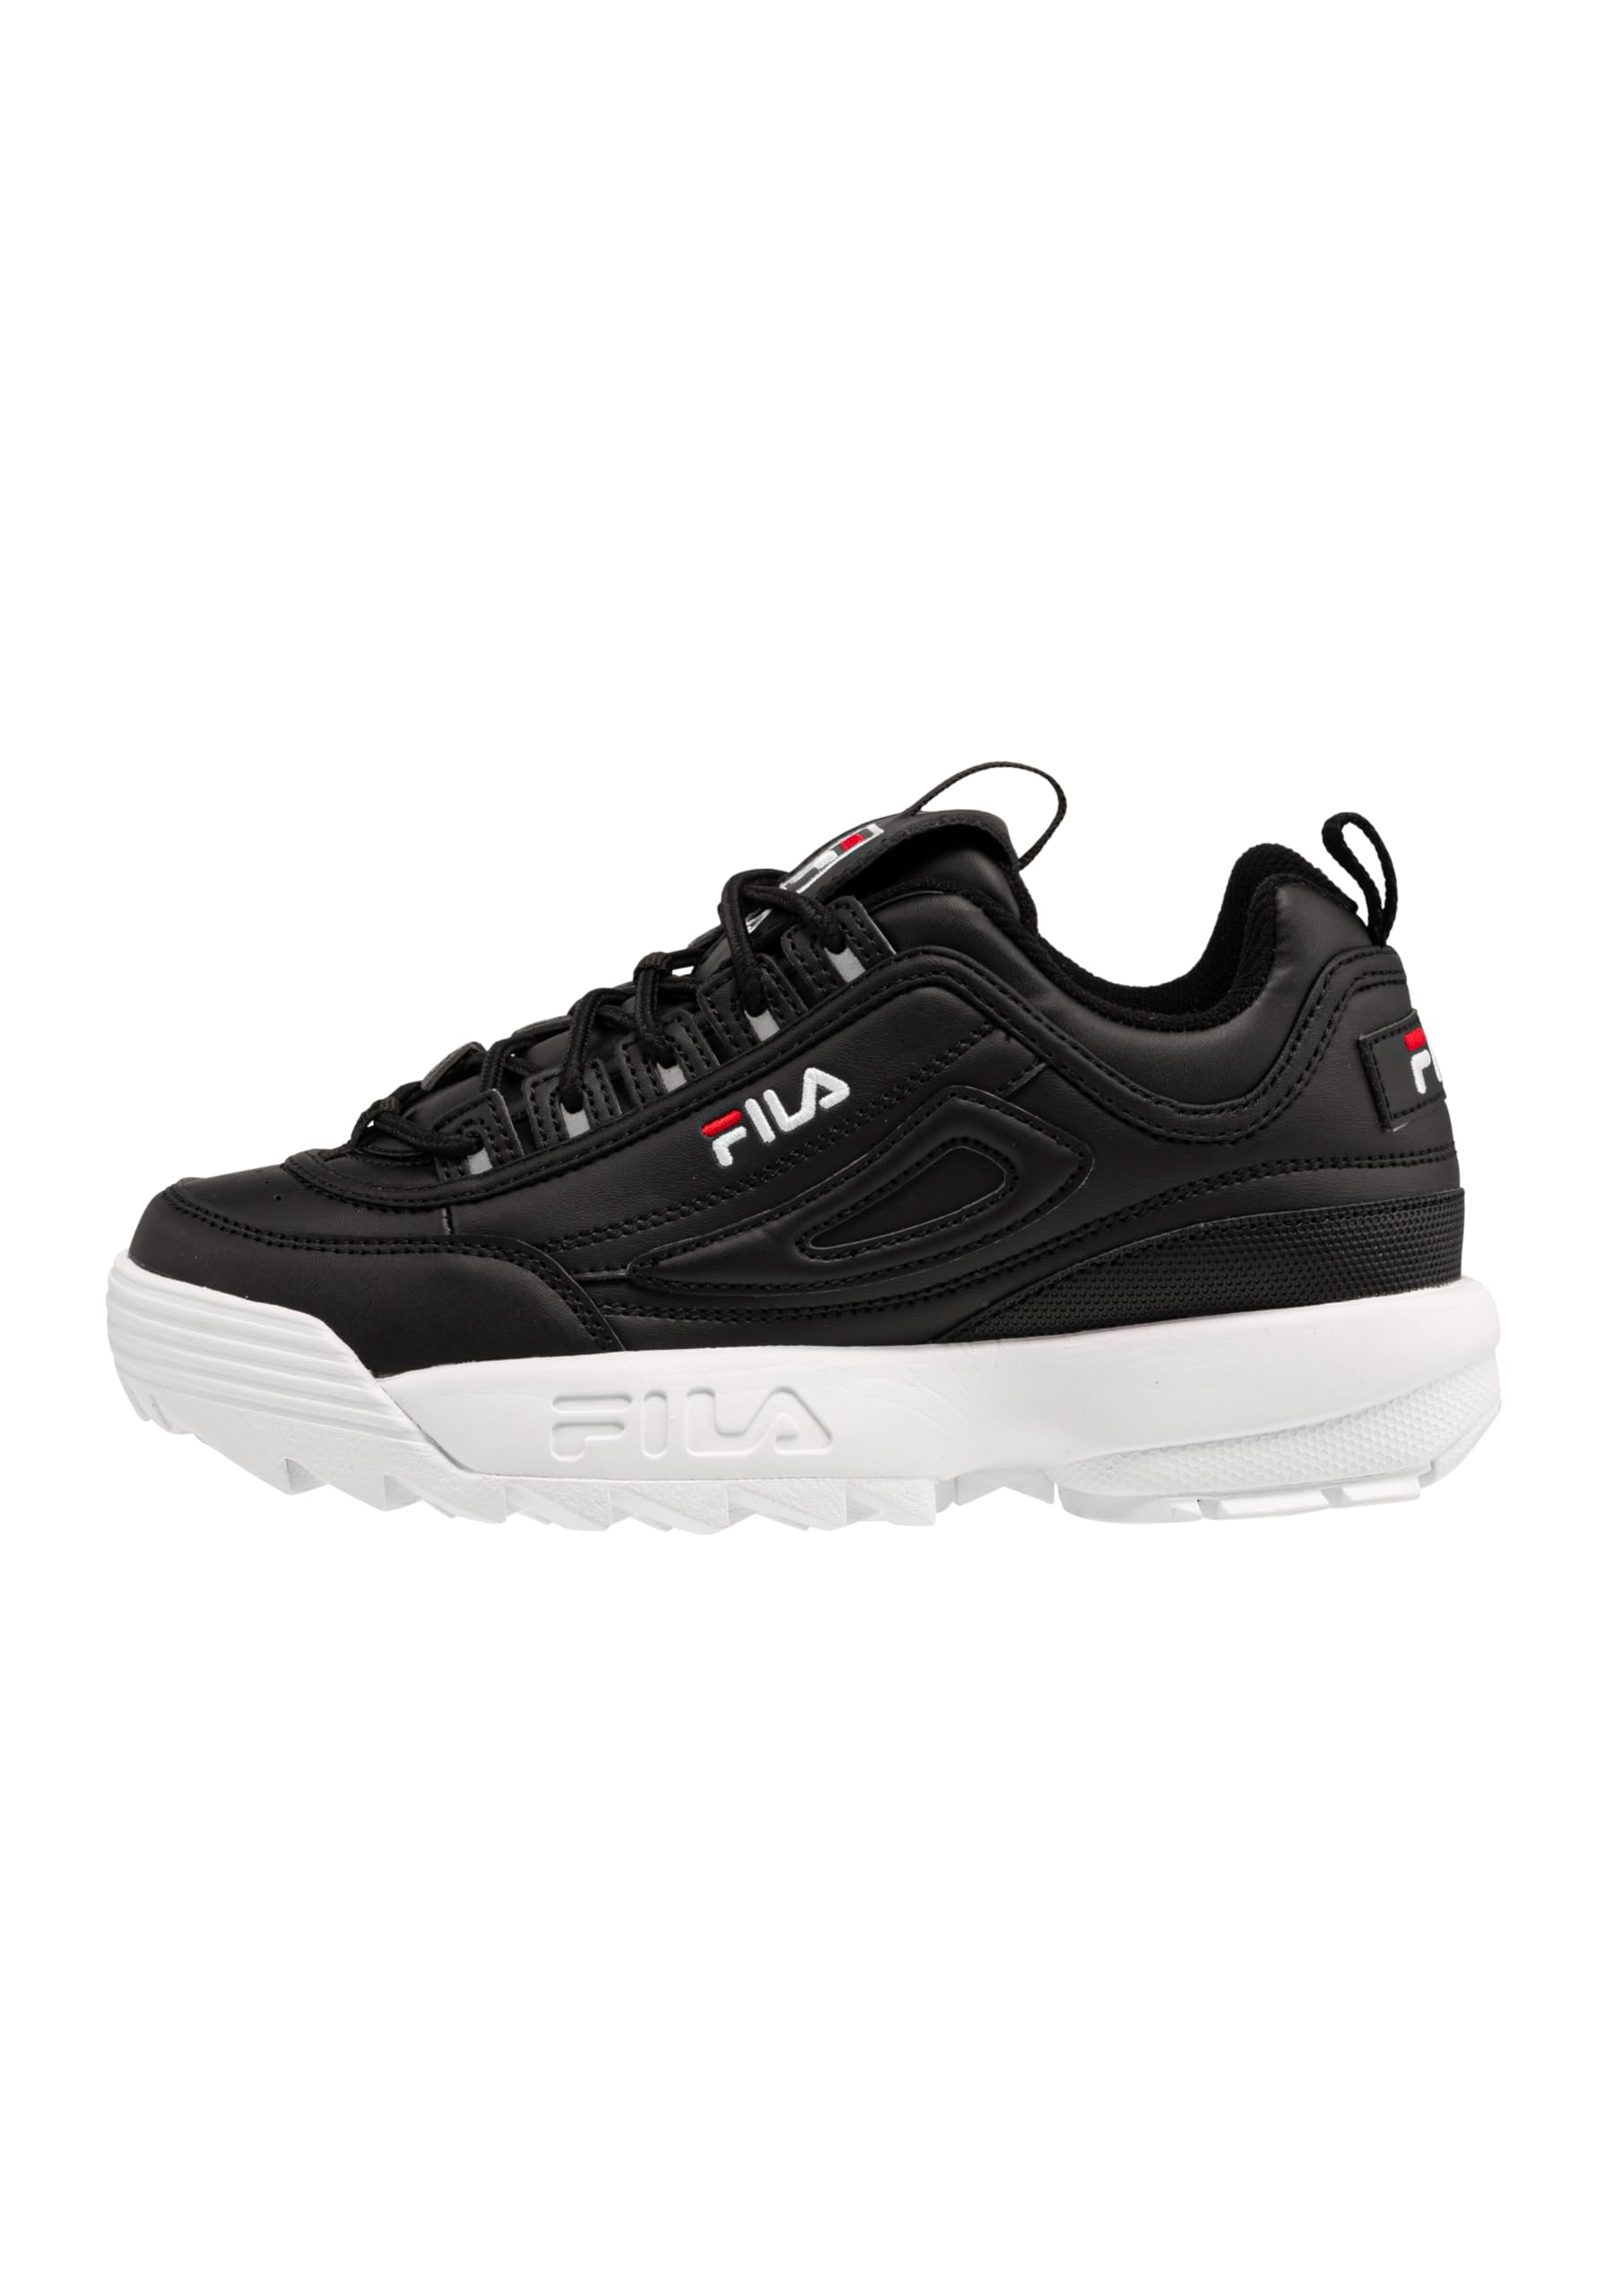 FILA Damen Disruptor wmn Sneaker, Black, 37 EU